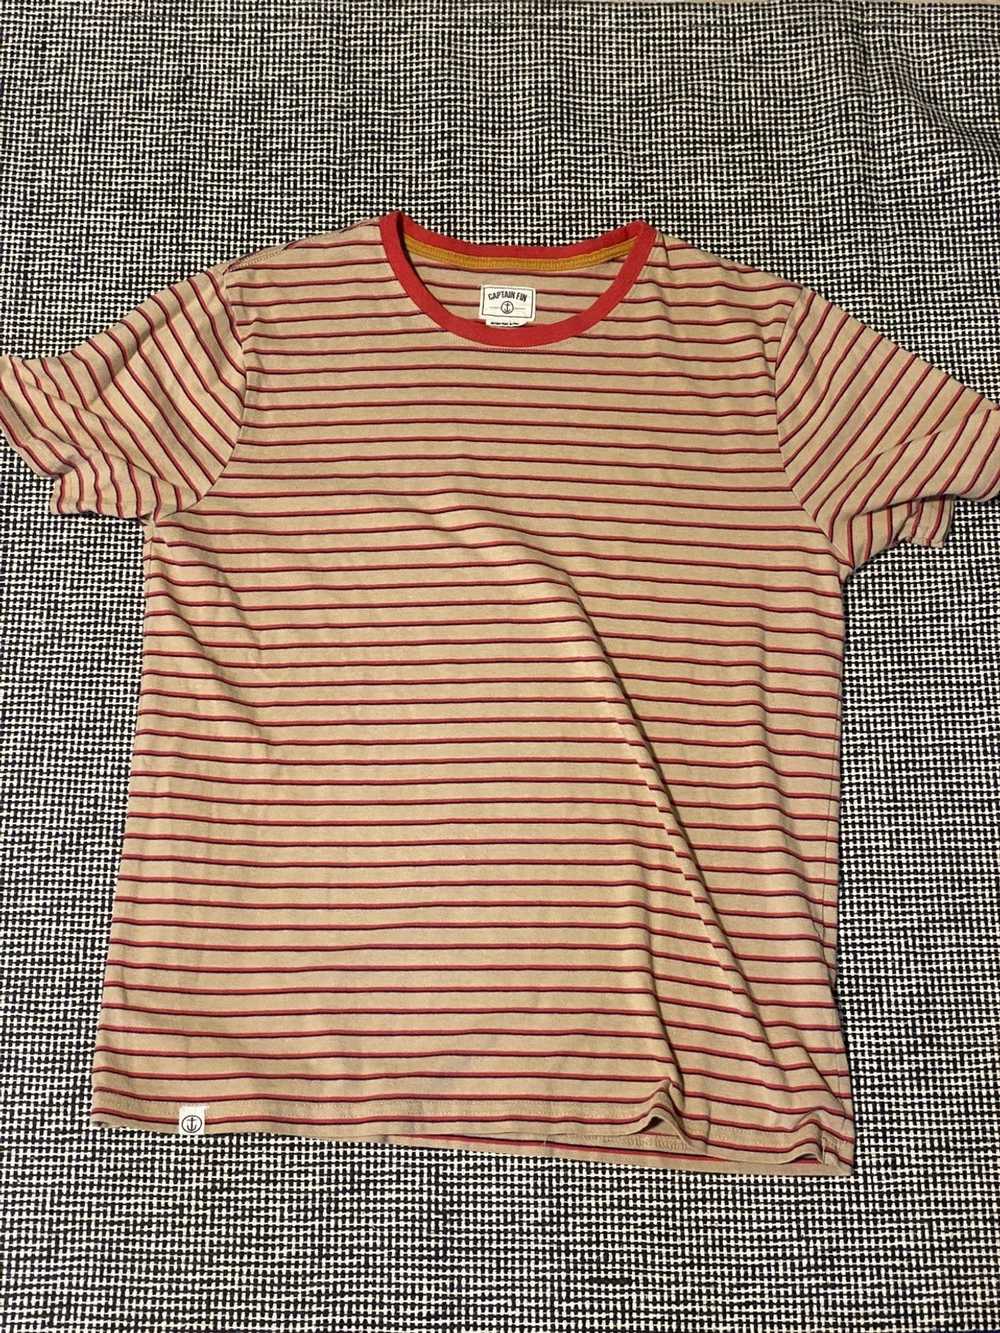 Captain Fin& Co. Tan striped shirt - image 1